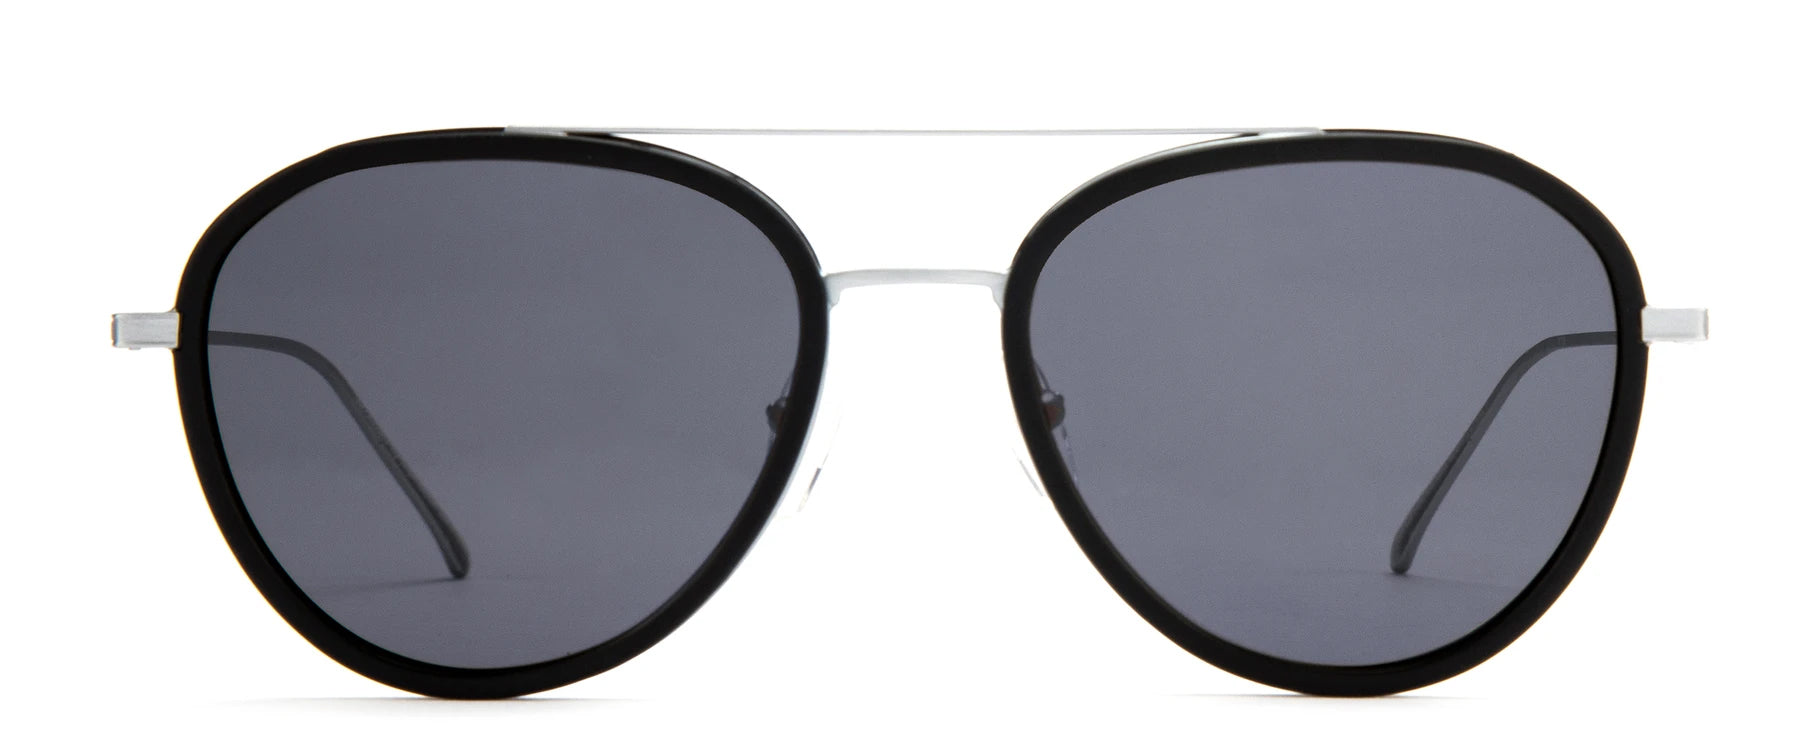 Otis Templin Polarized Sunglasses Matte Black Grey Aviator